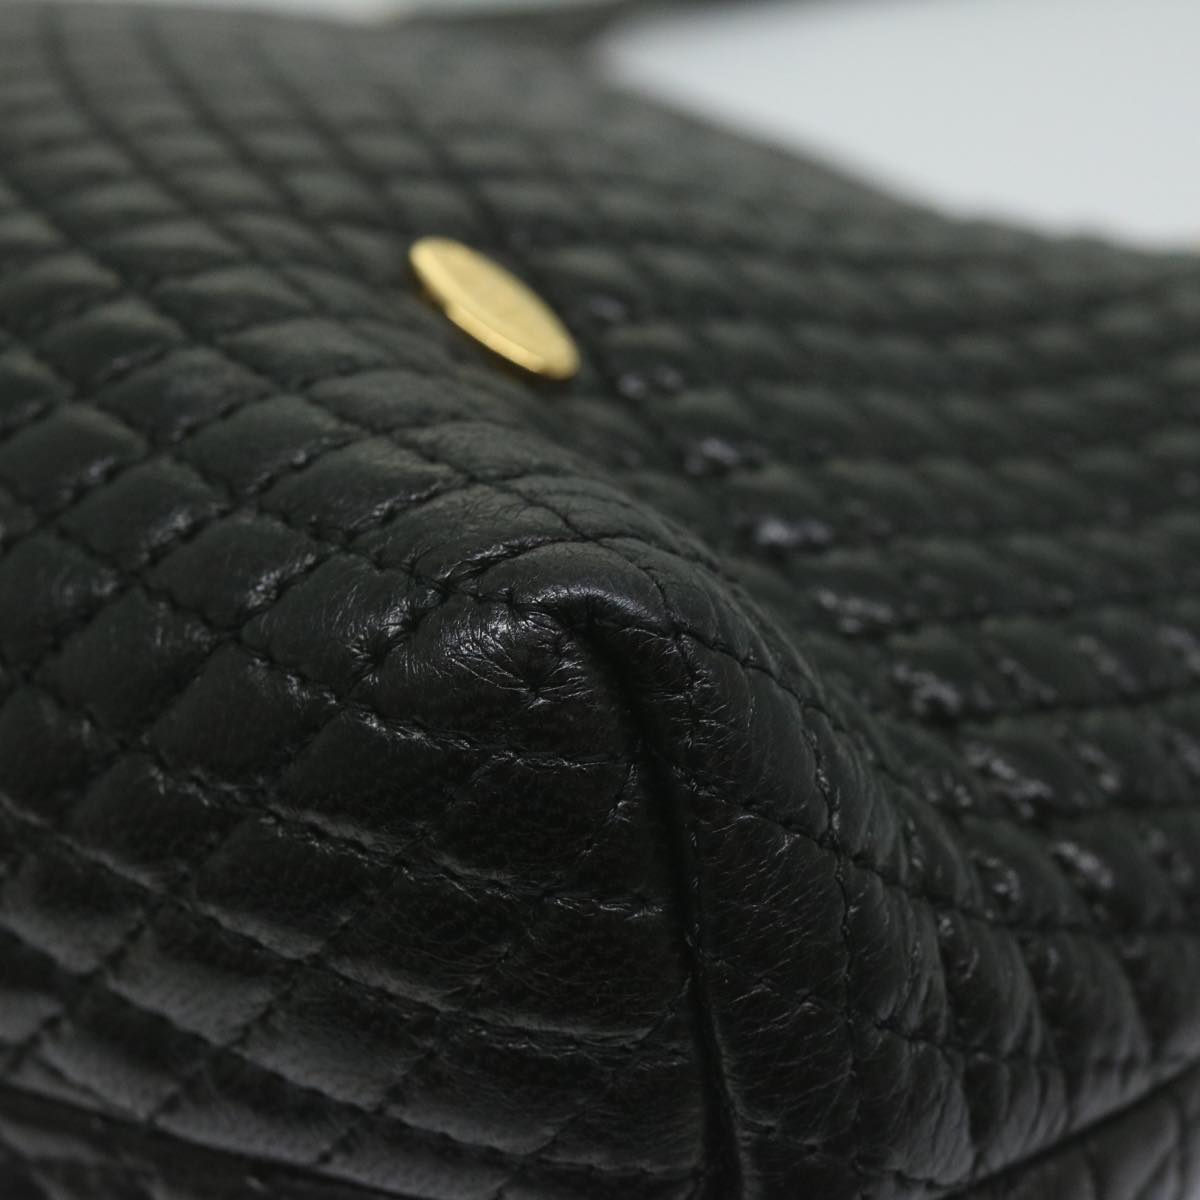 BALLY Matelasse Shoulder Bag Leather Black Auth ki3916